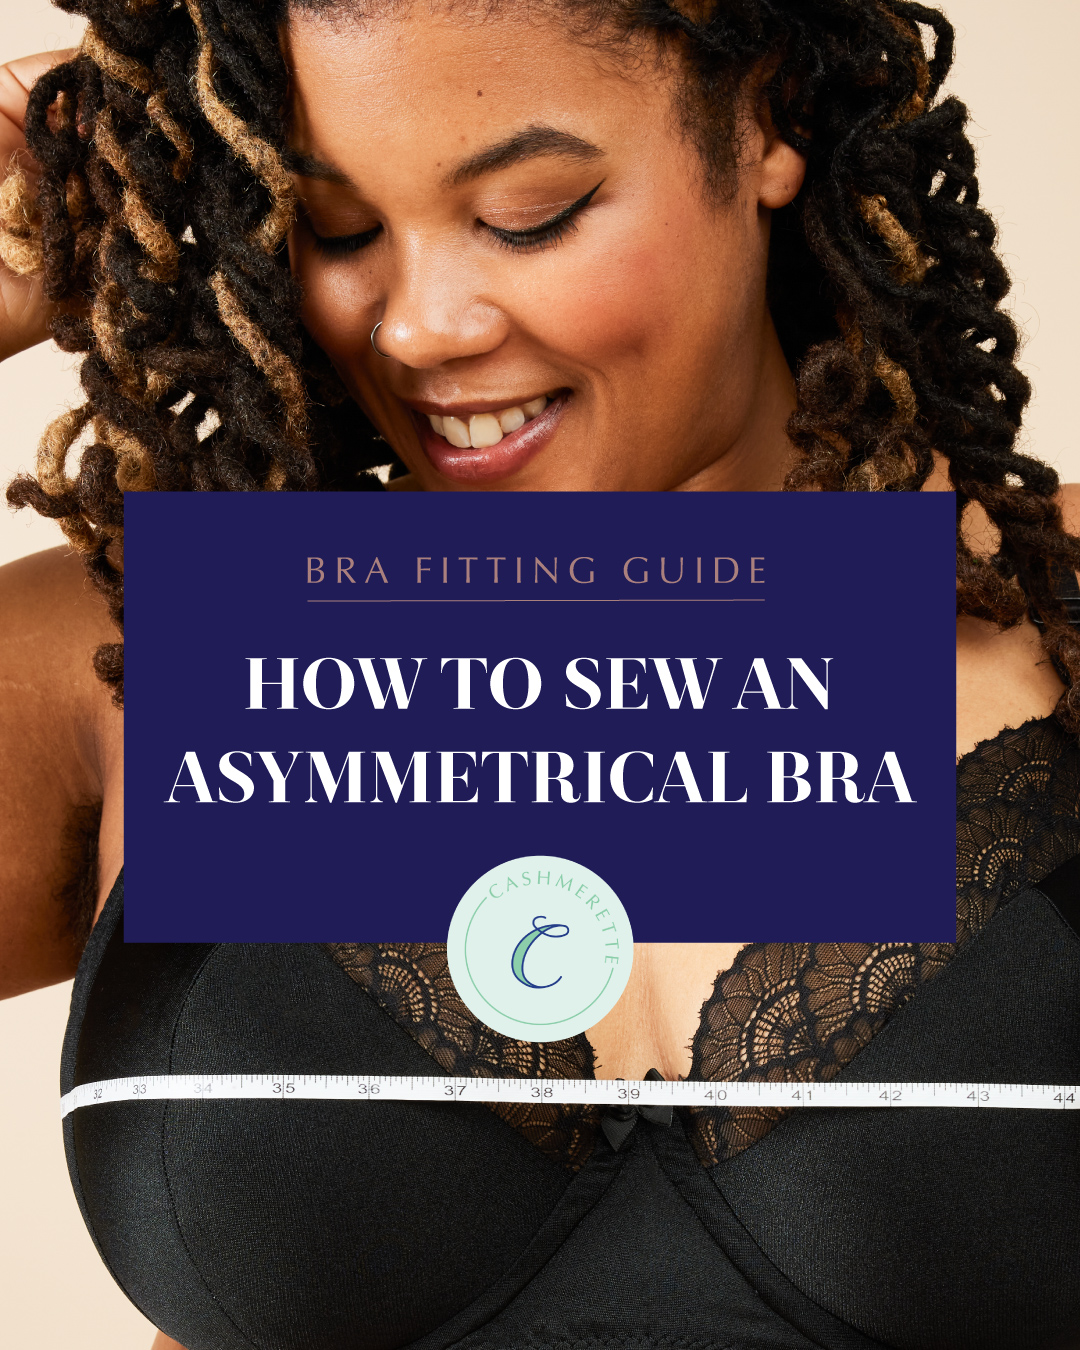 How to adjust the side seam angle of a bra